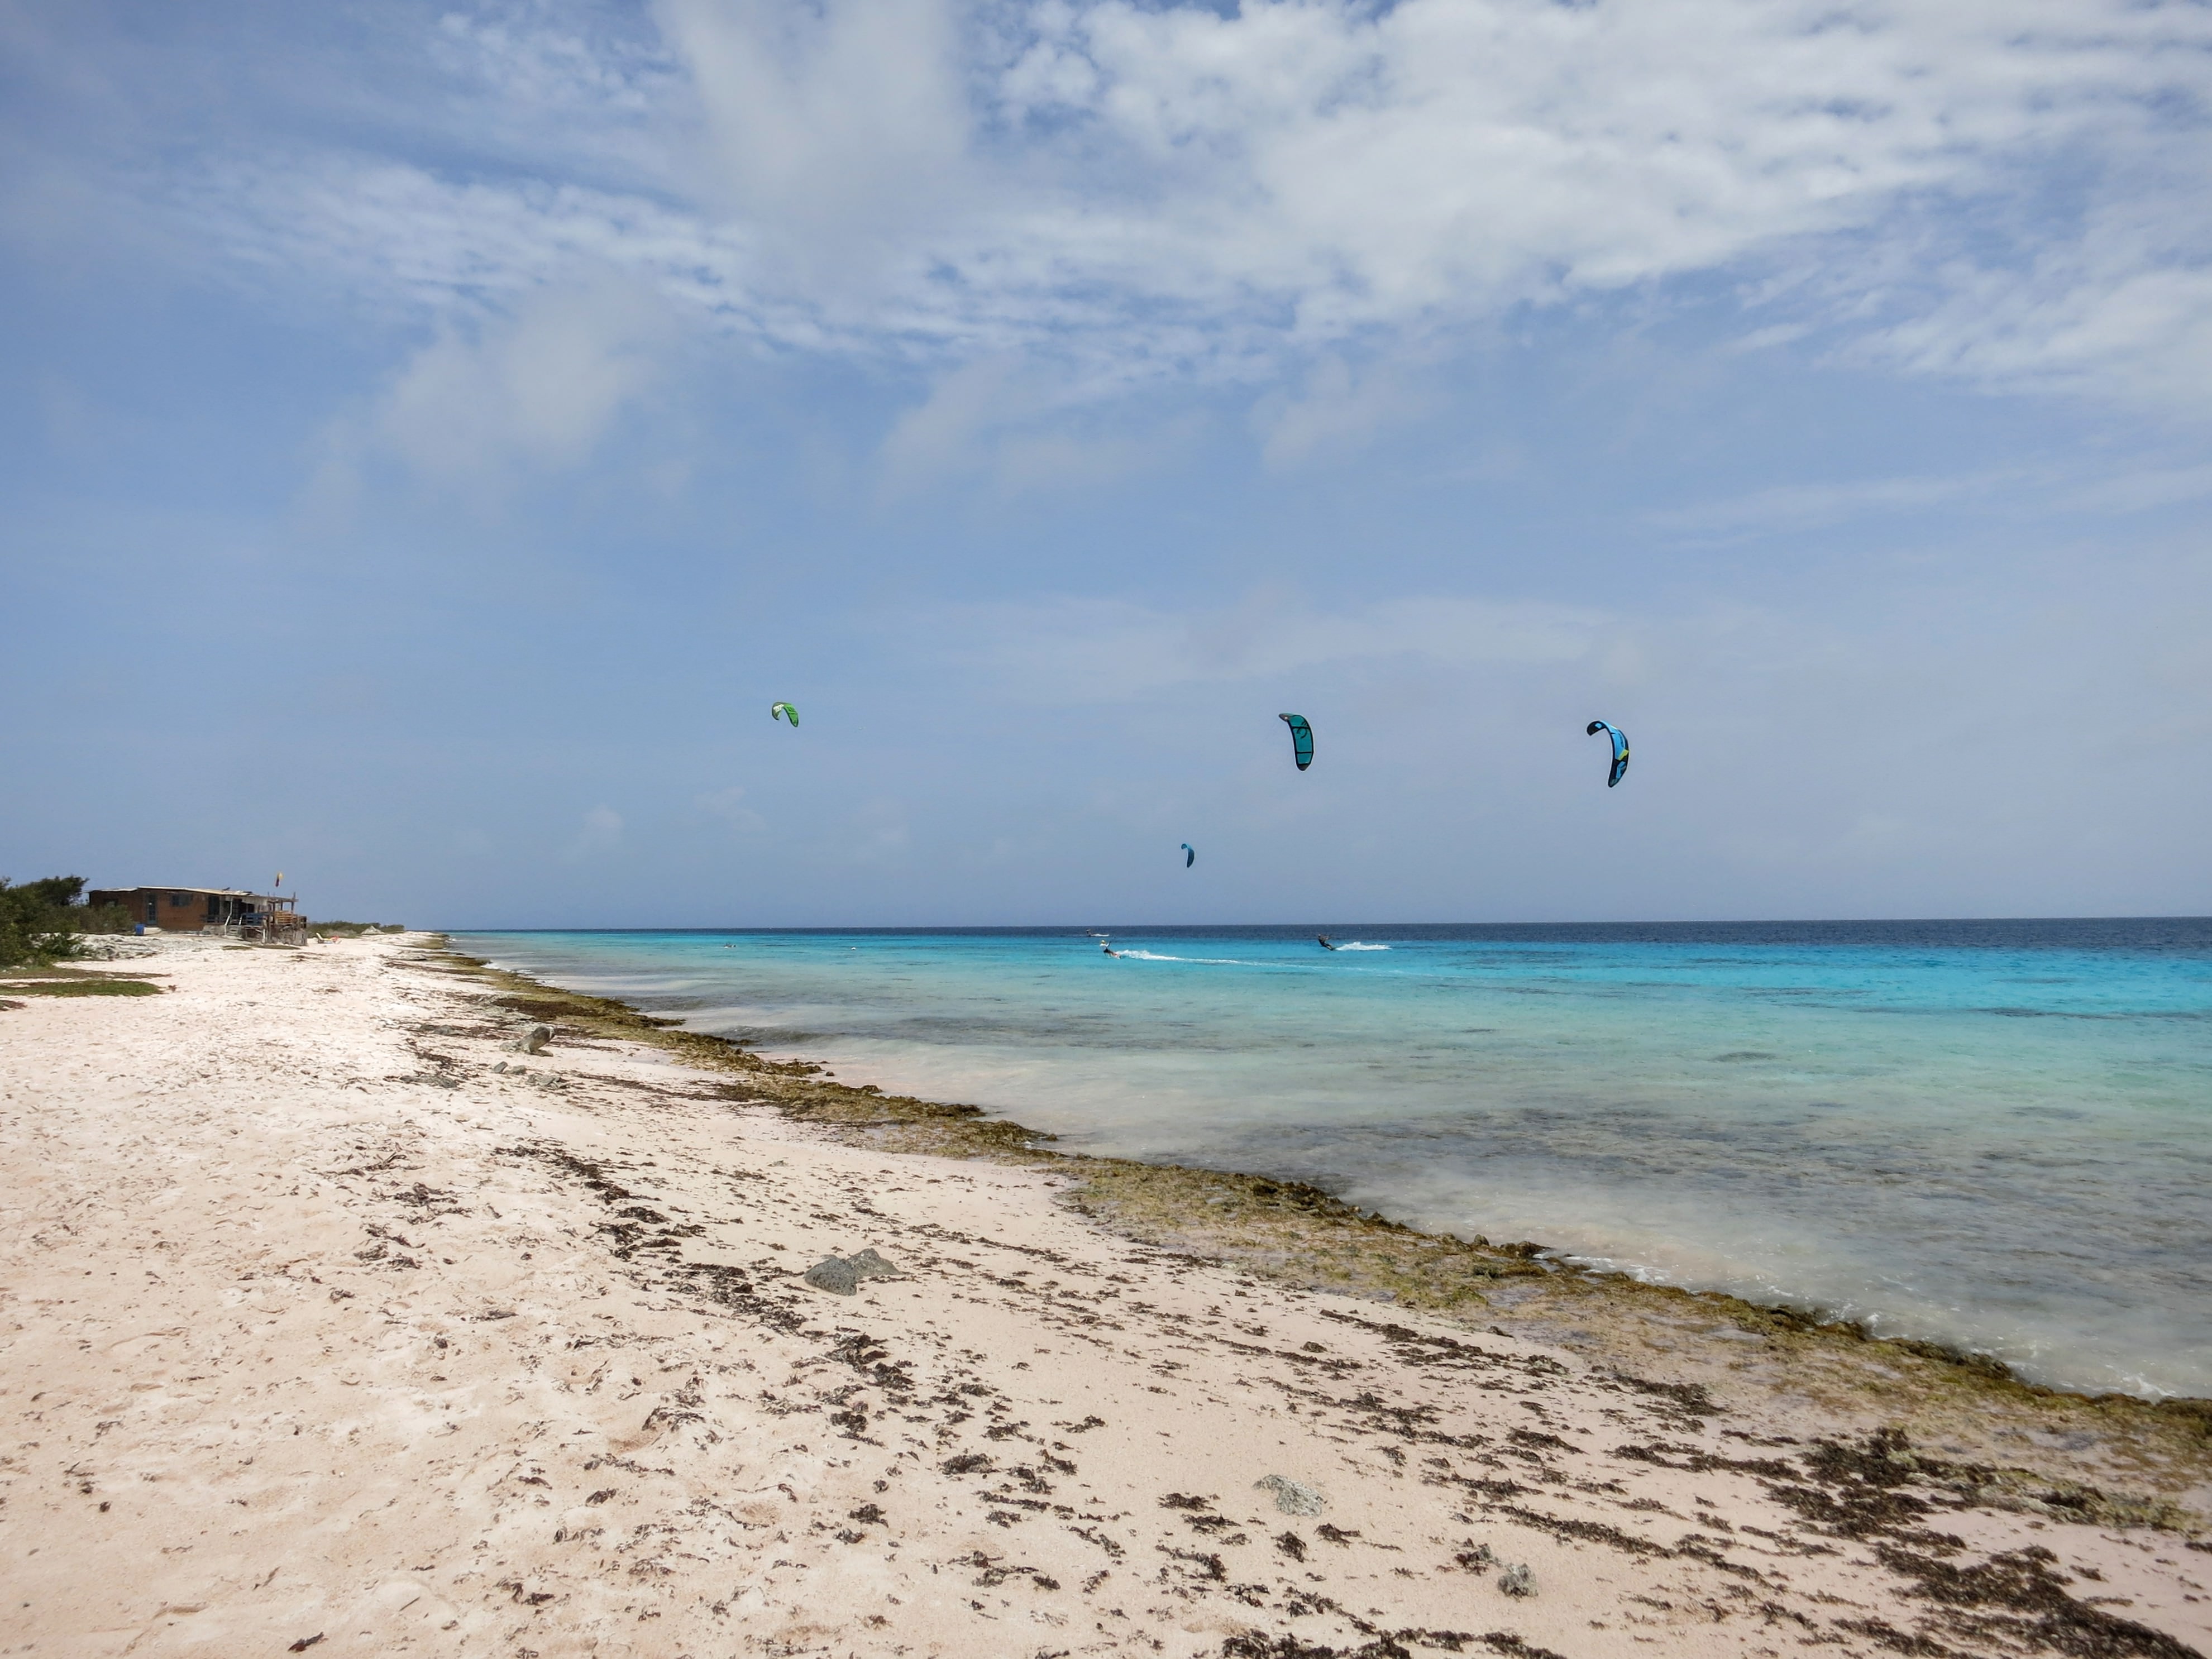 Kitesurfing in Bonaire